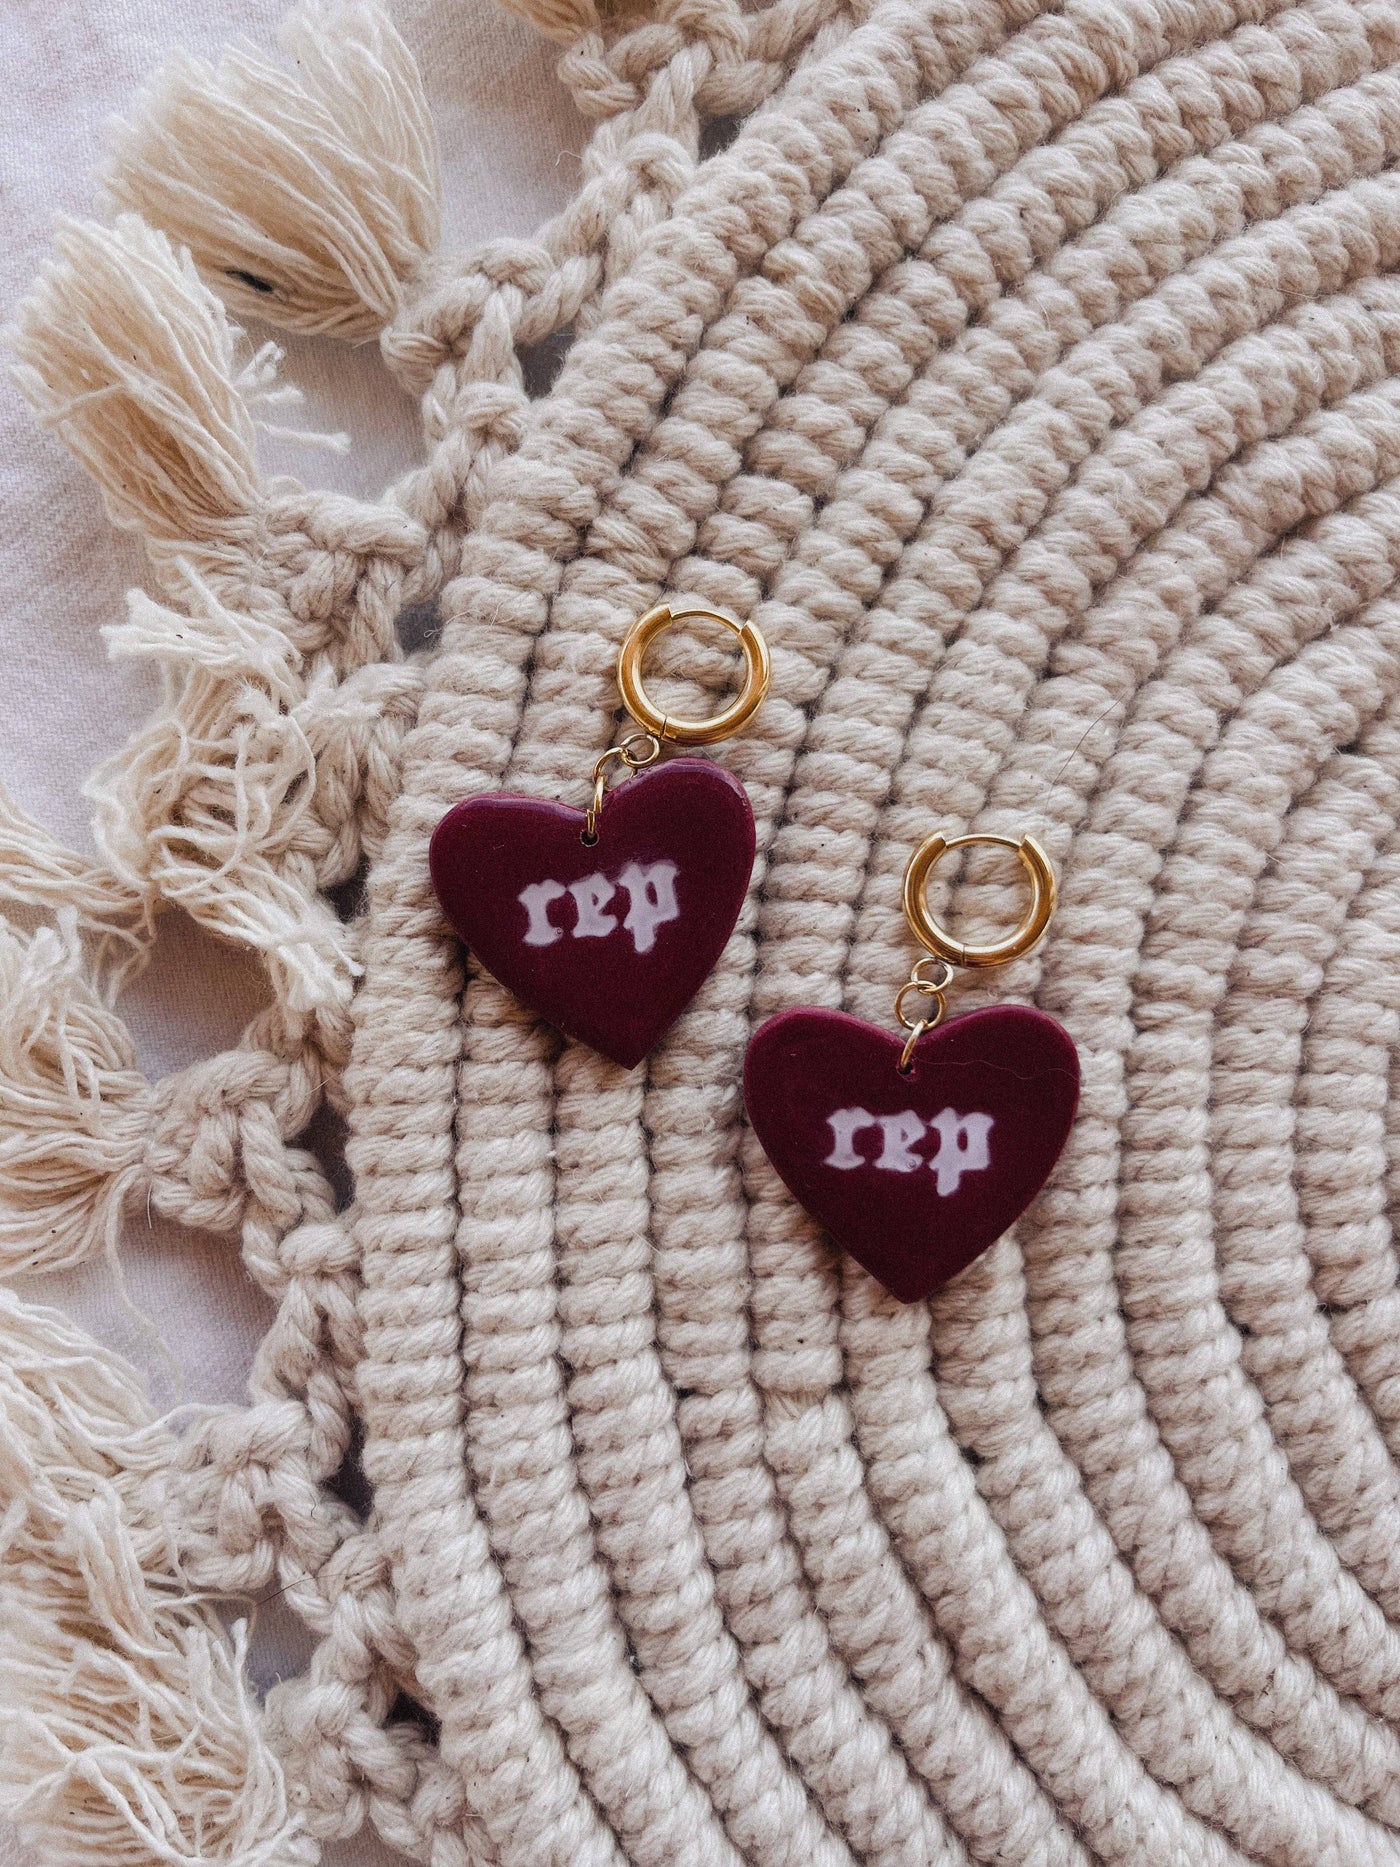 Rep Heart Huggies / Clay Earrings / Taylor Swift Earrings